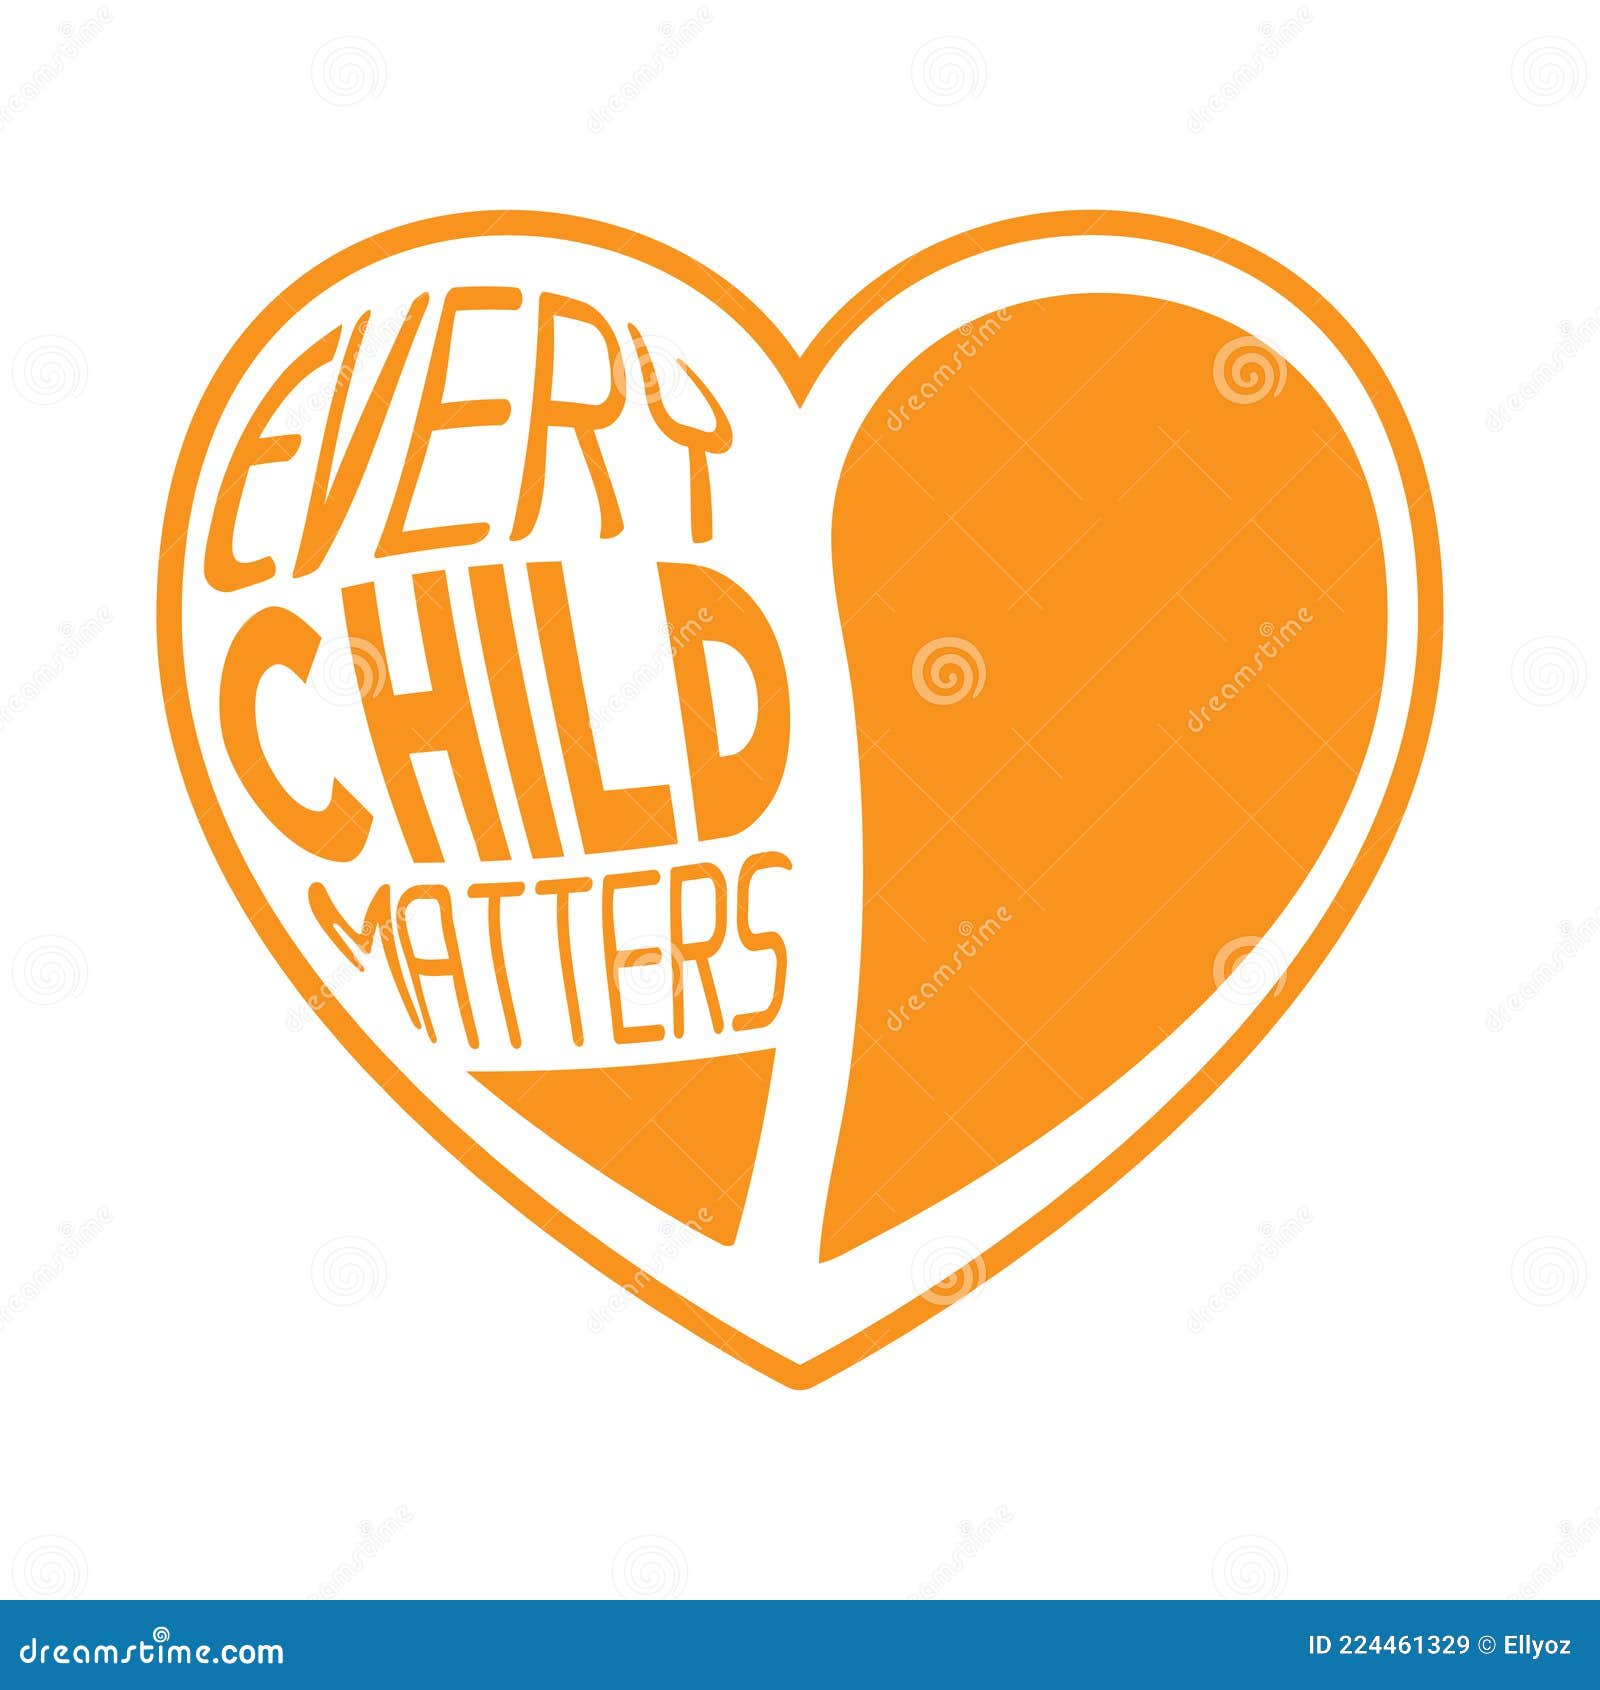 every child matters  